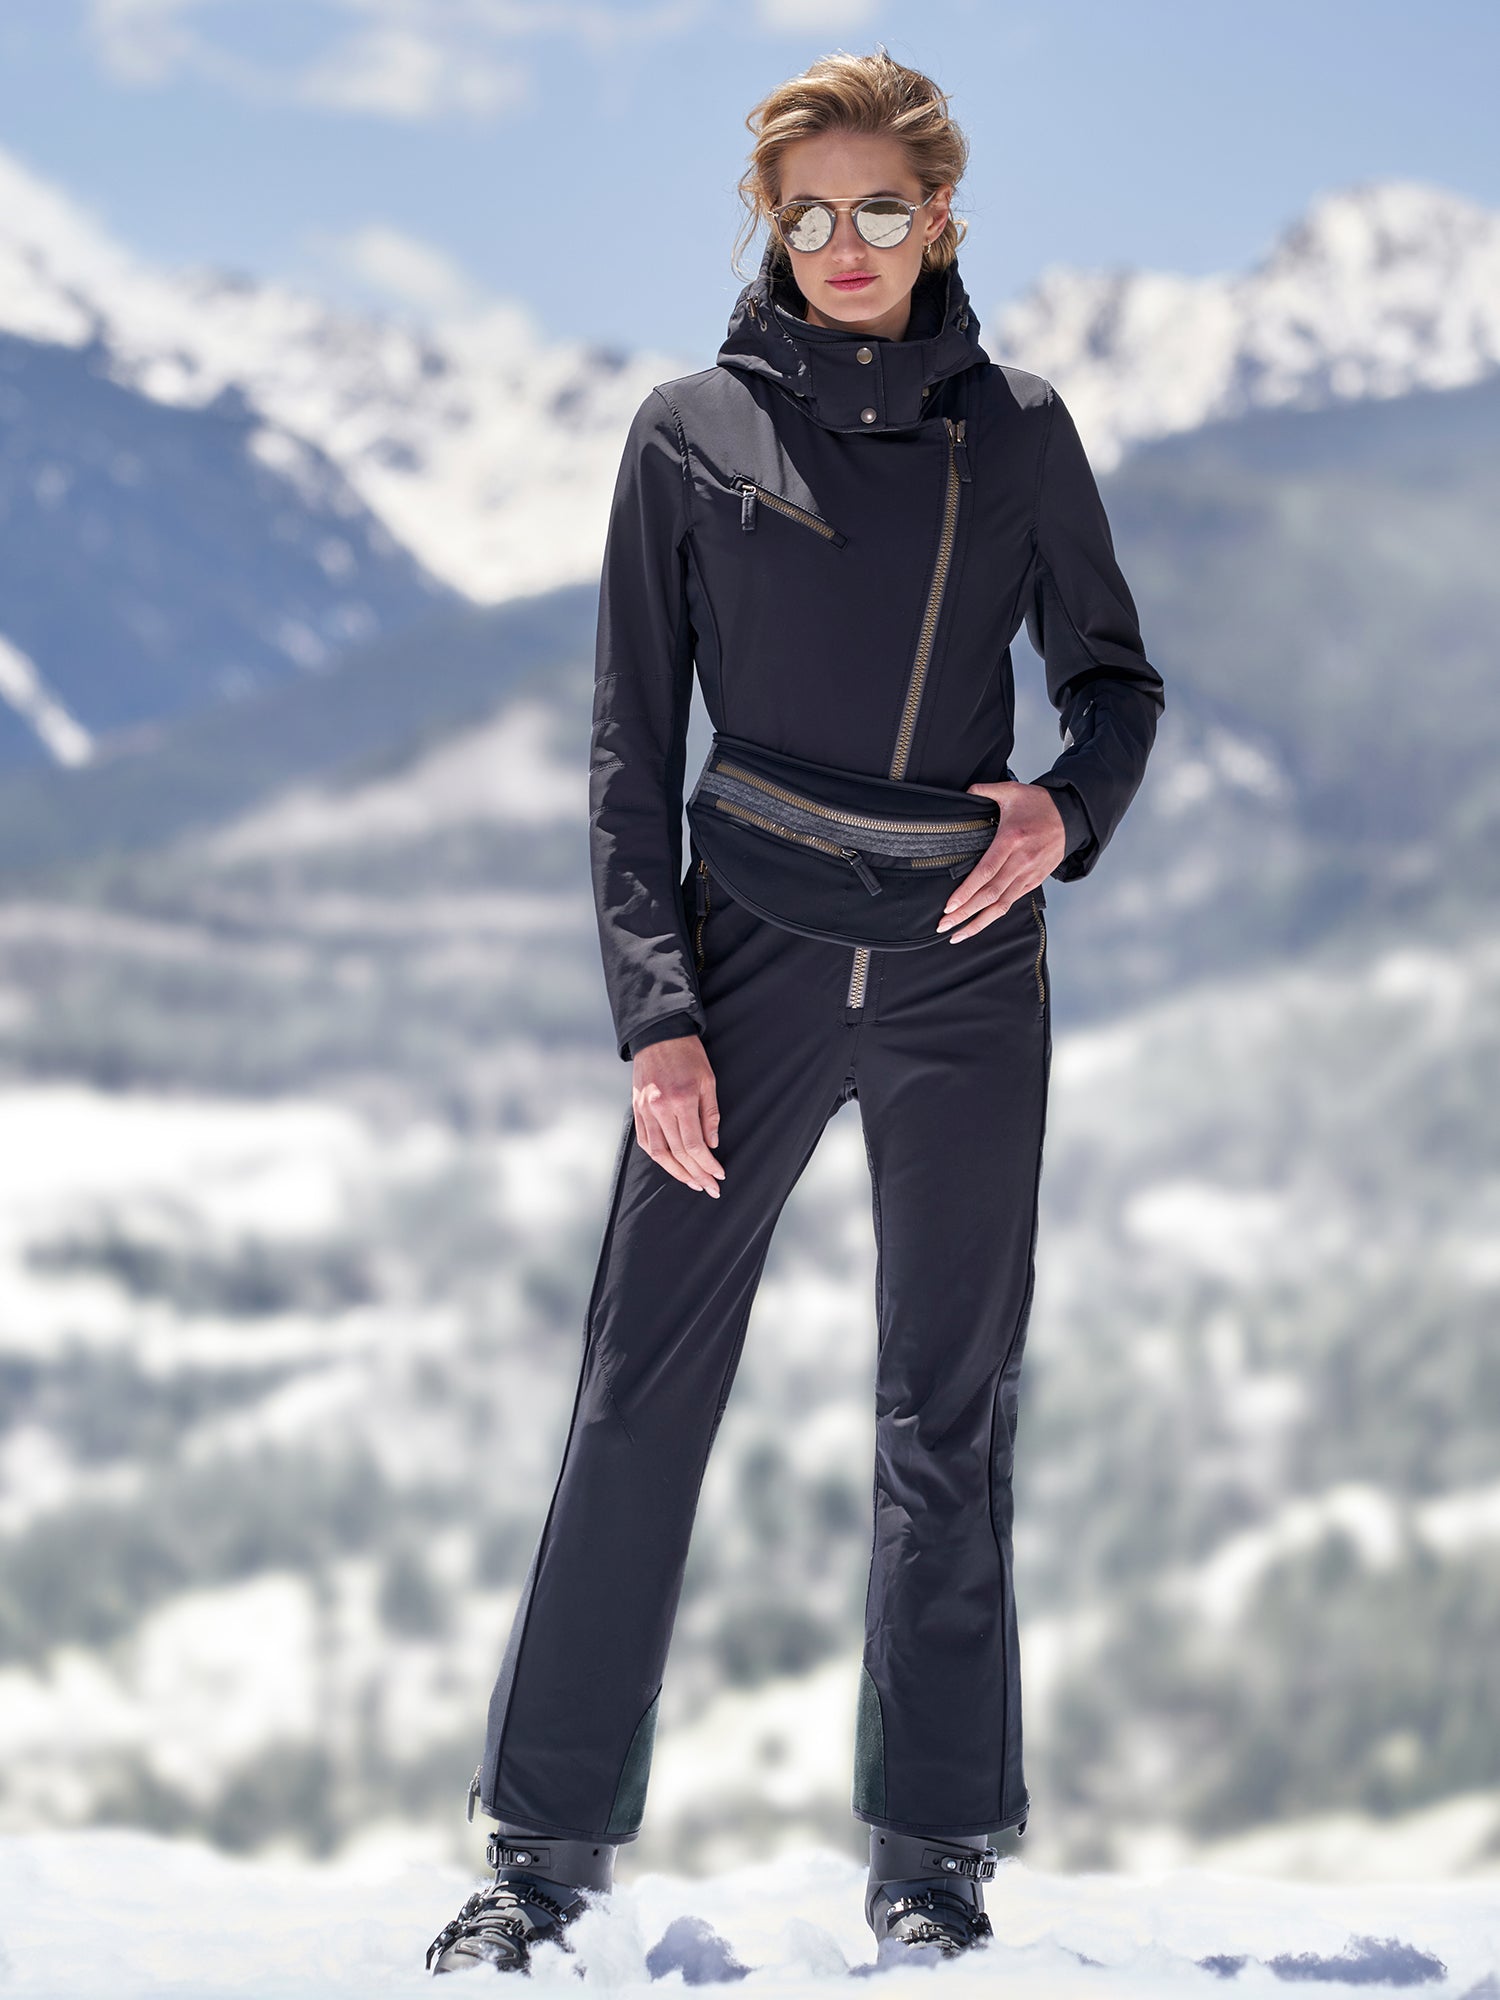 All Black Ski Outfit  Skiing outfit, Ski women, Black ski outfit